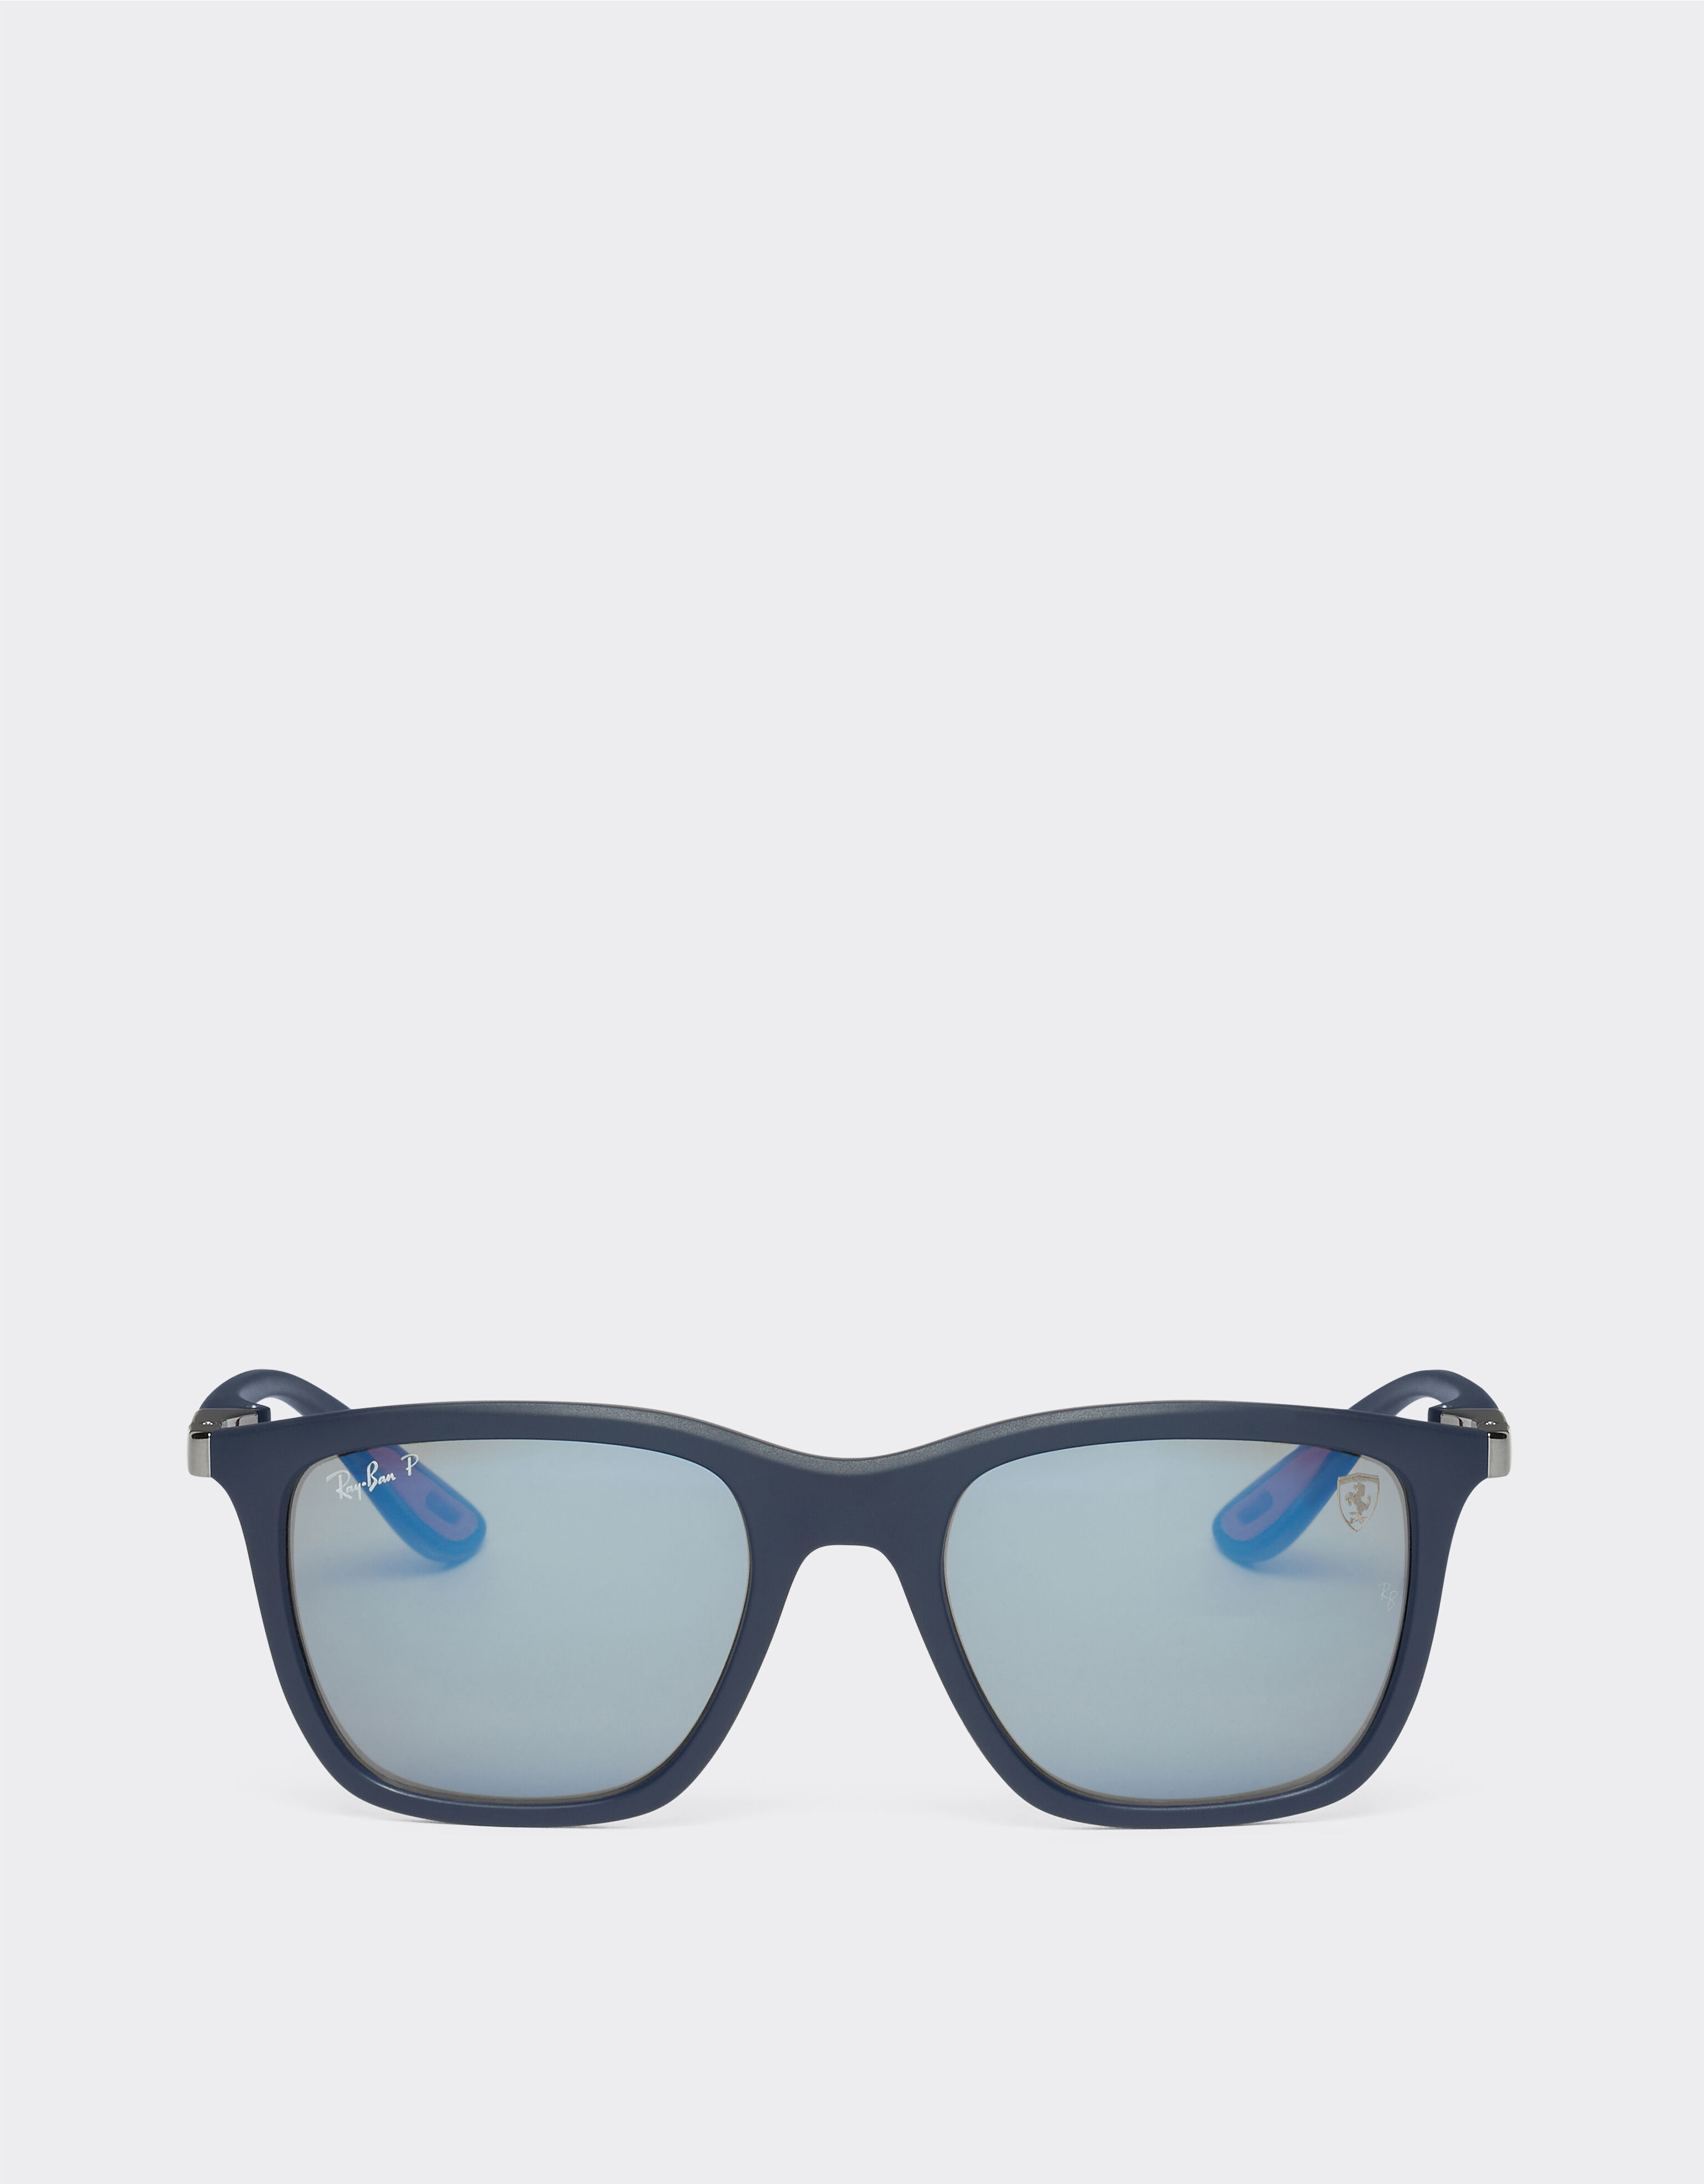 ${brand} Gafas de sol Ray-Ban para la Scuderia Ferrari 0RB4433M azul mate con lentes polarizadas azules de espejo ${colorDescription} ${masterID}